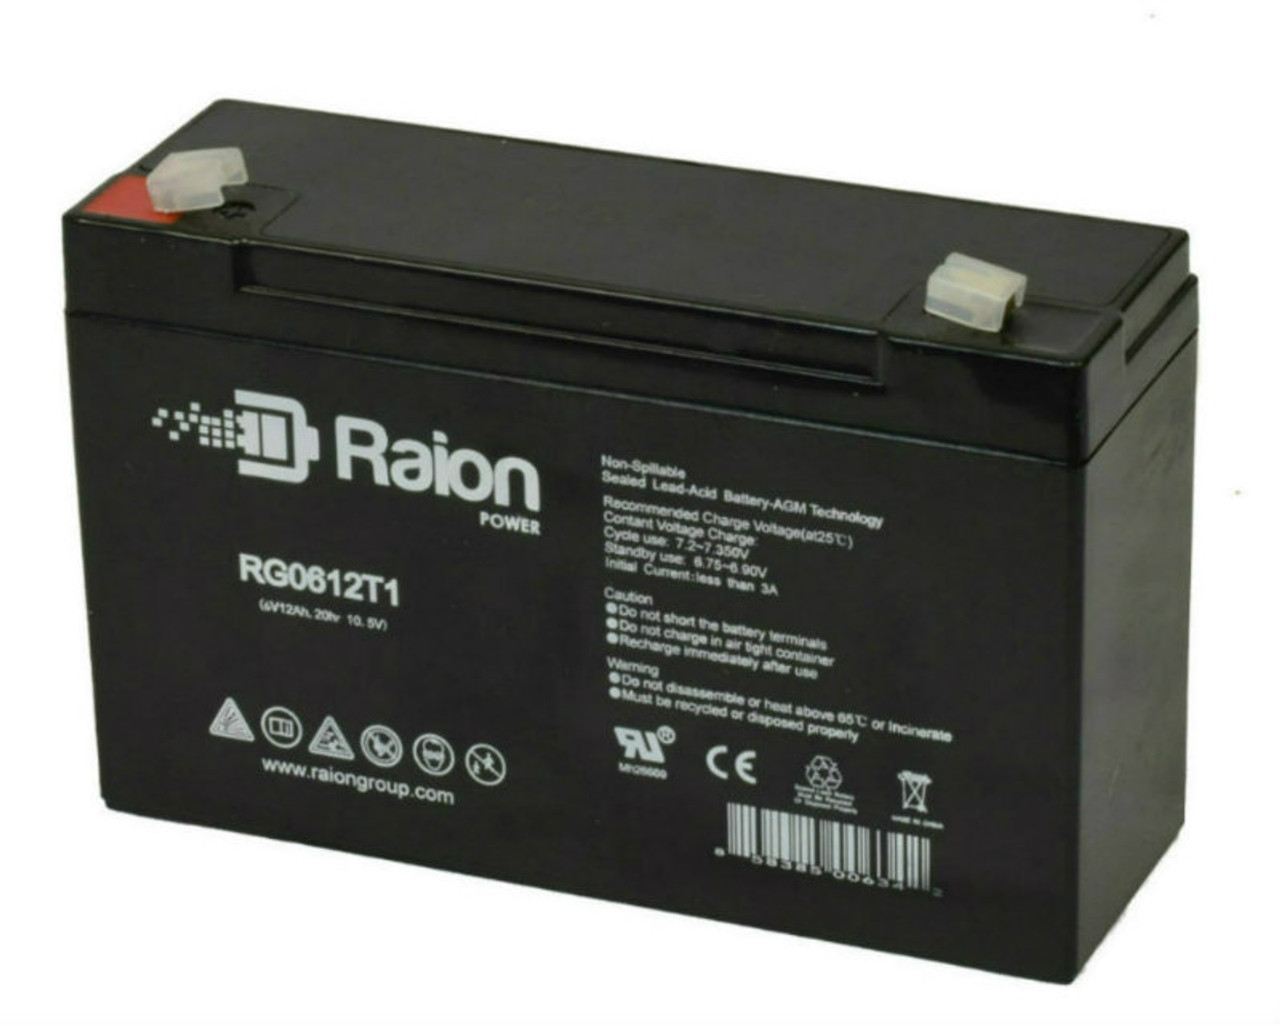 Raion Power RG06120T1 Replacement 6V 12Ah Emergency Light Battery for Sonnenschein G12012